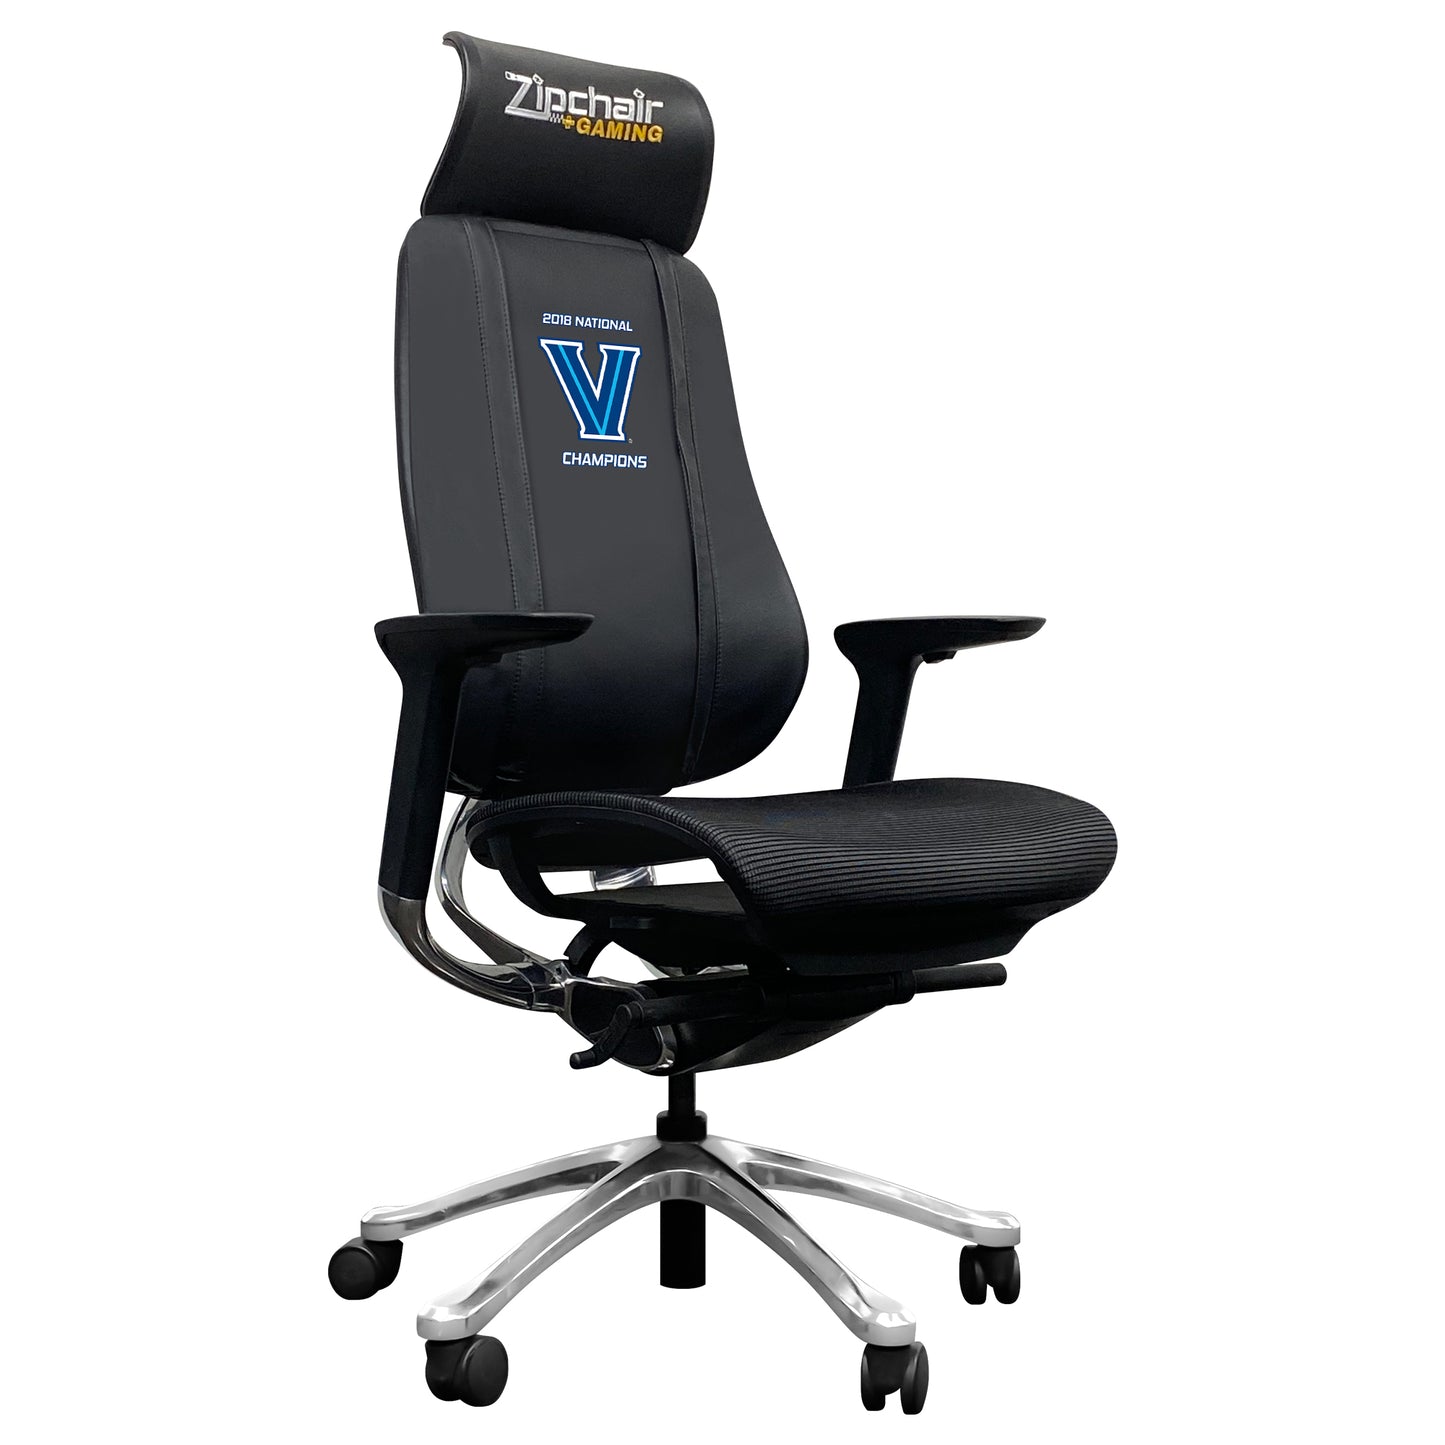 PhantomX Gaming Chair with Villanova Championship Logo